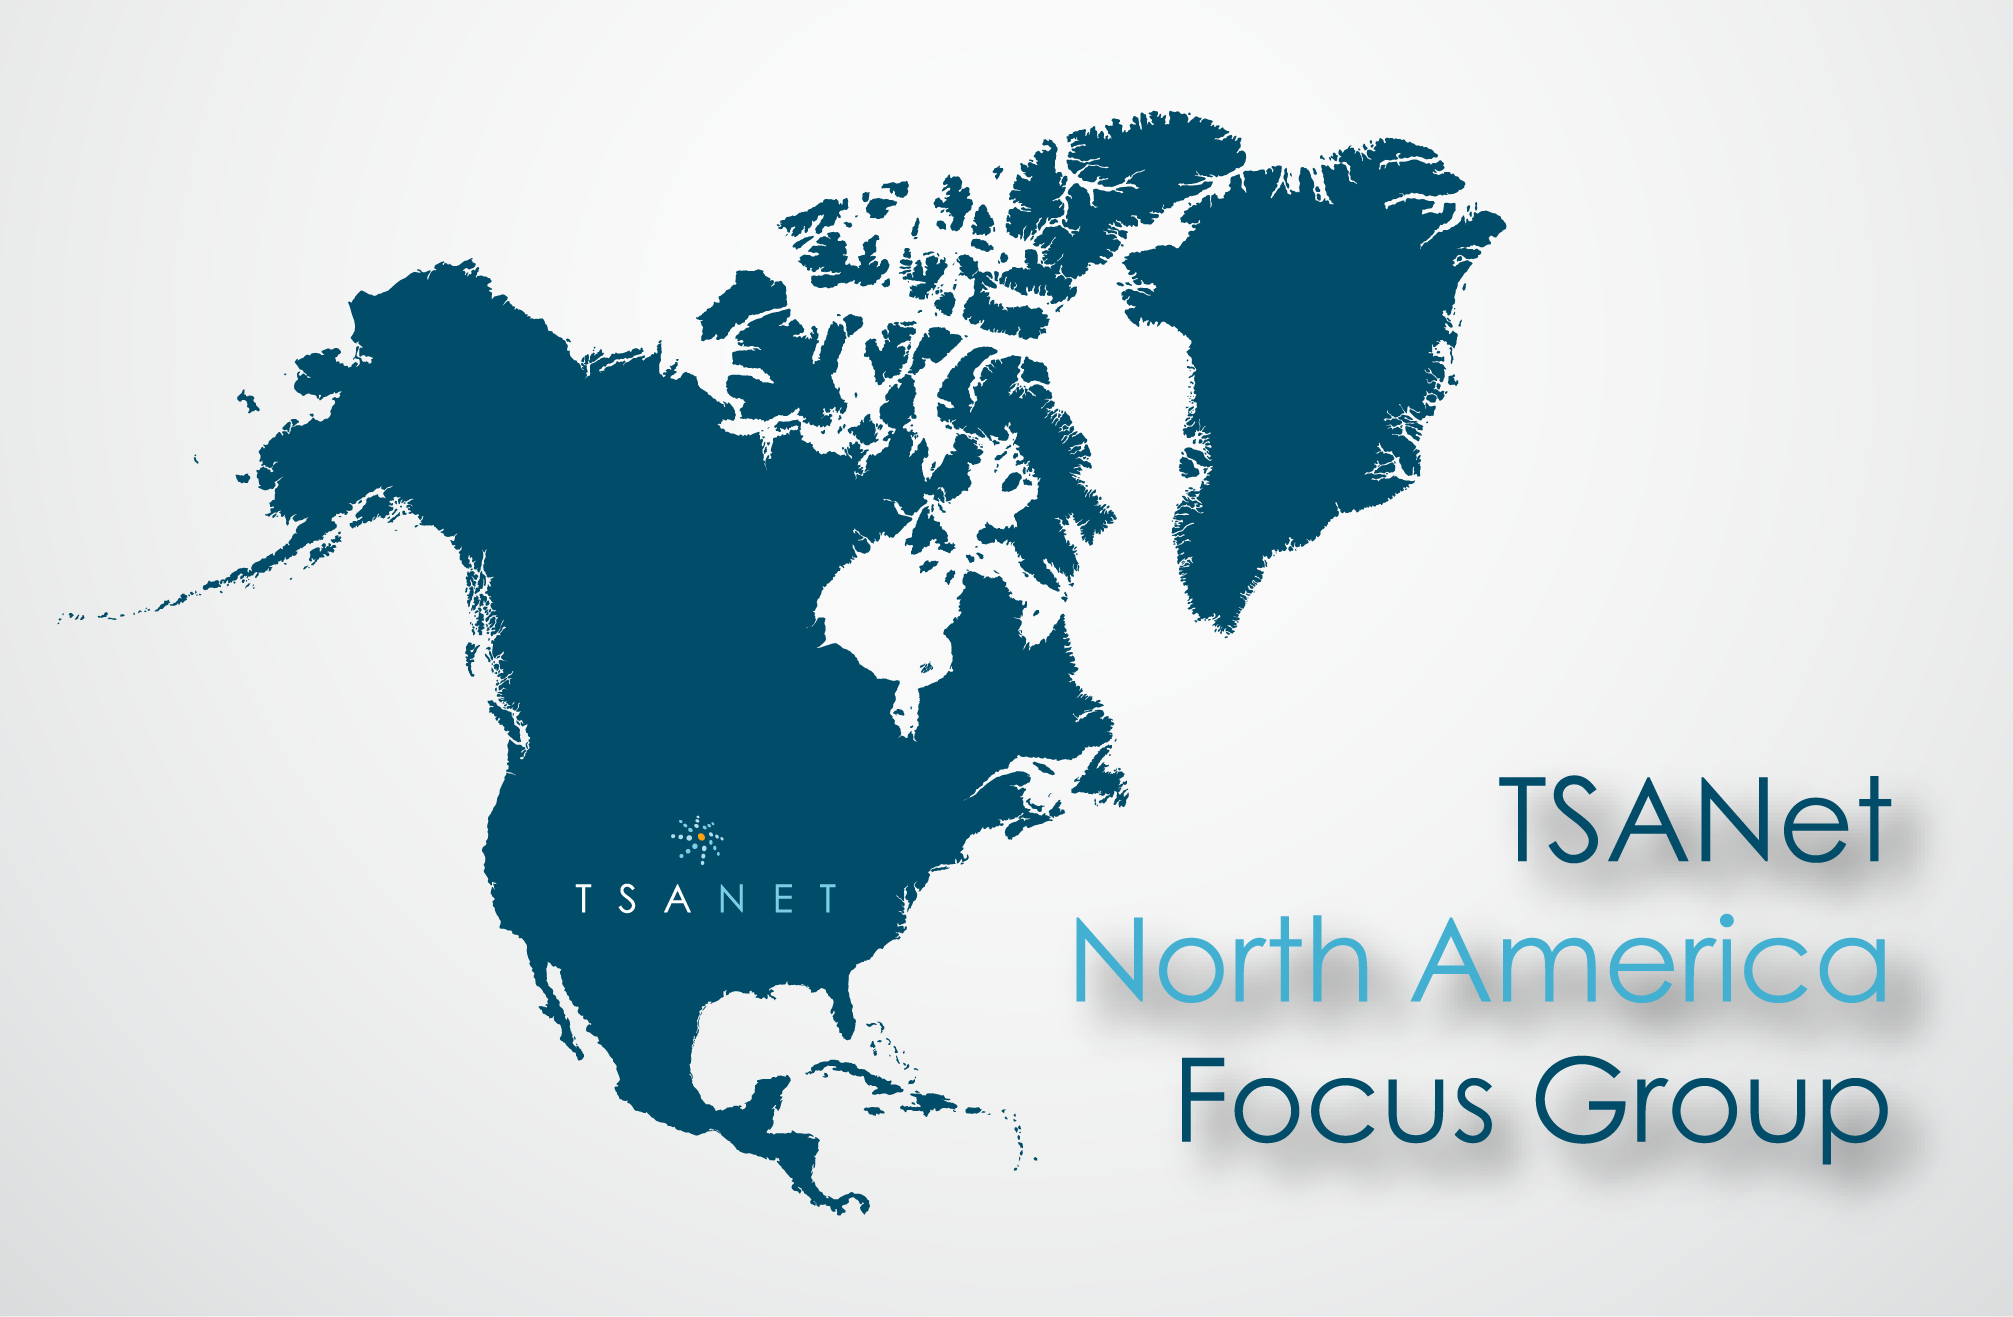 TSANet North America Focus Group